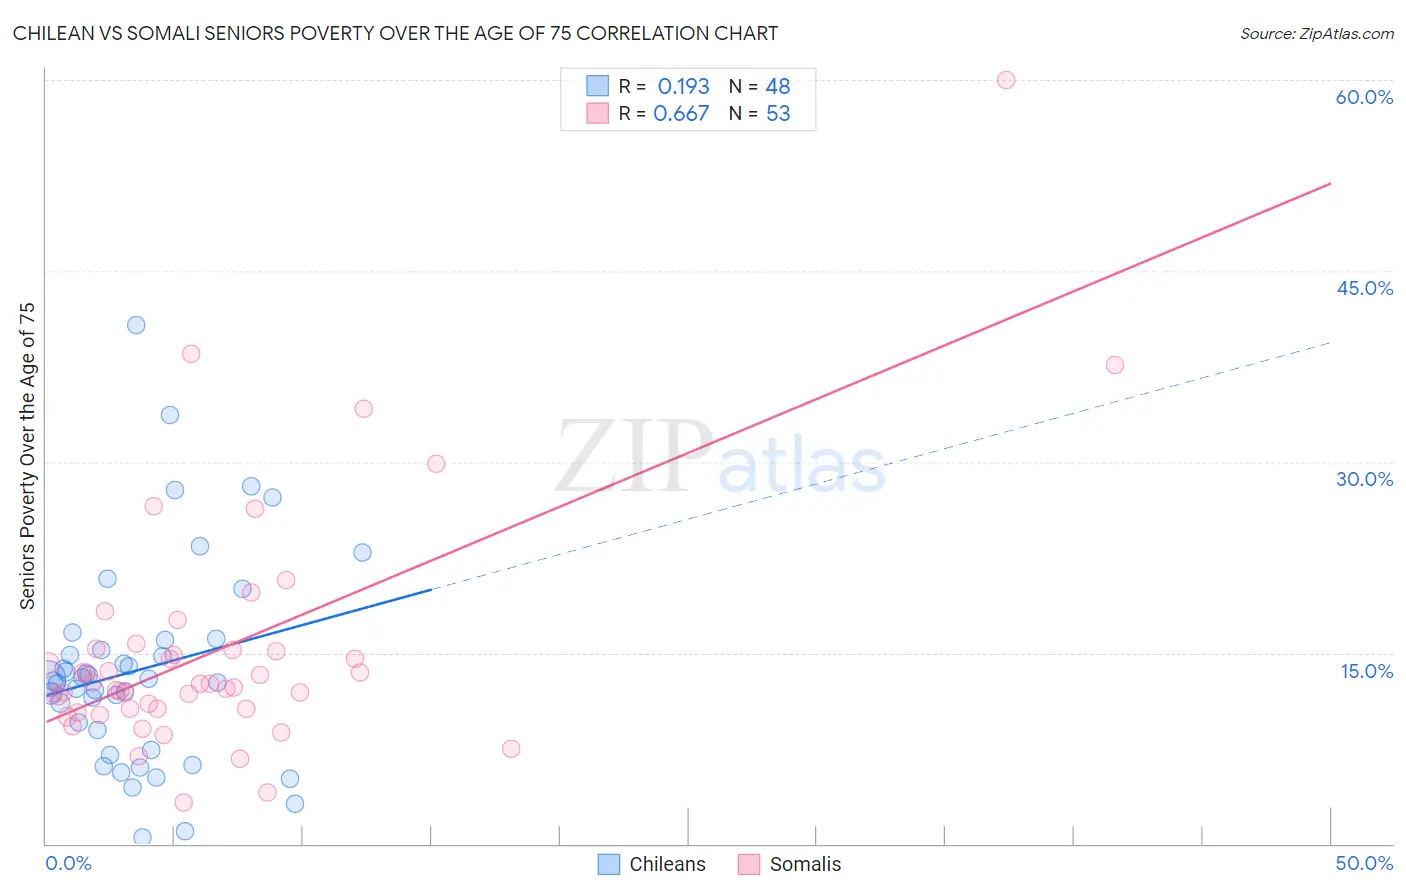 Chilean vs Somali Seniors Poverty Over the Age of 75